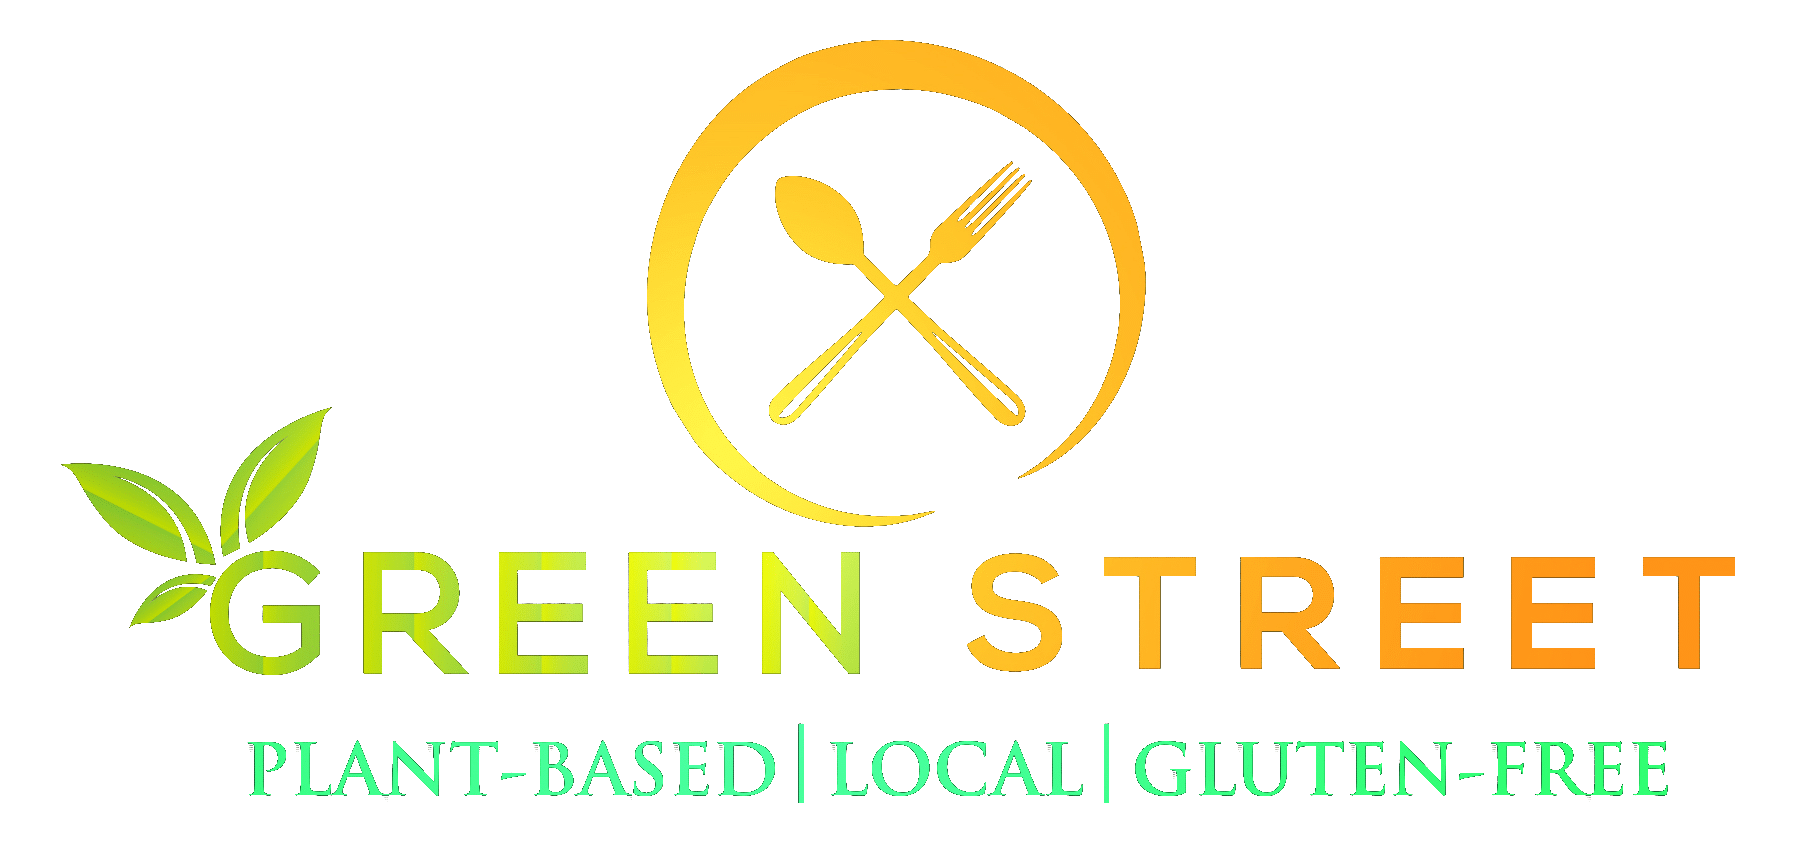 green street logo